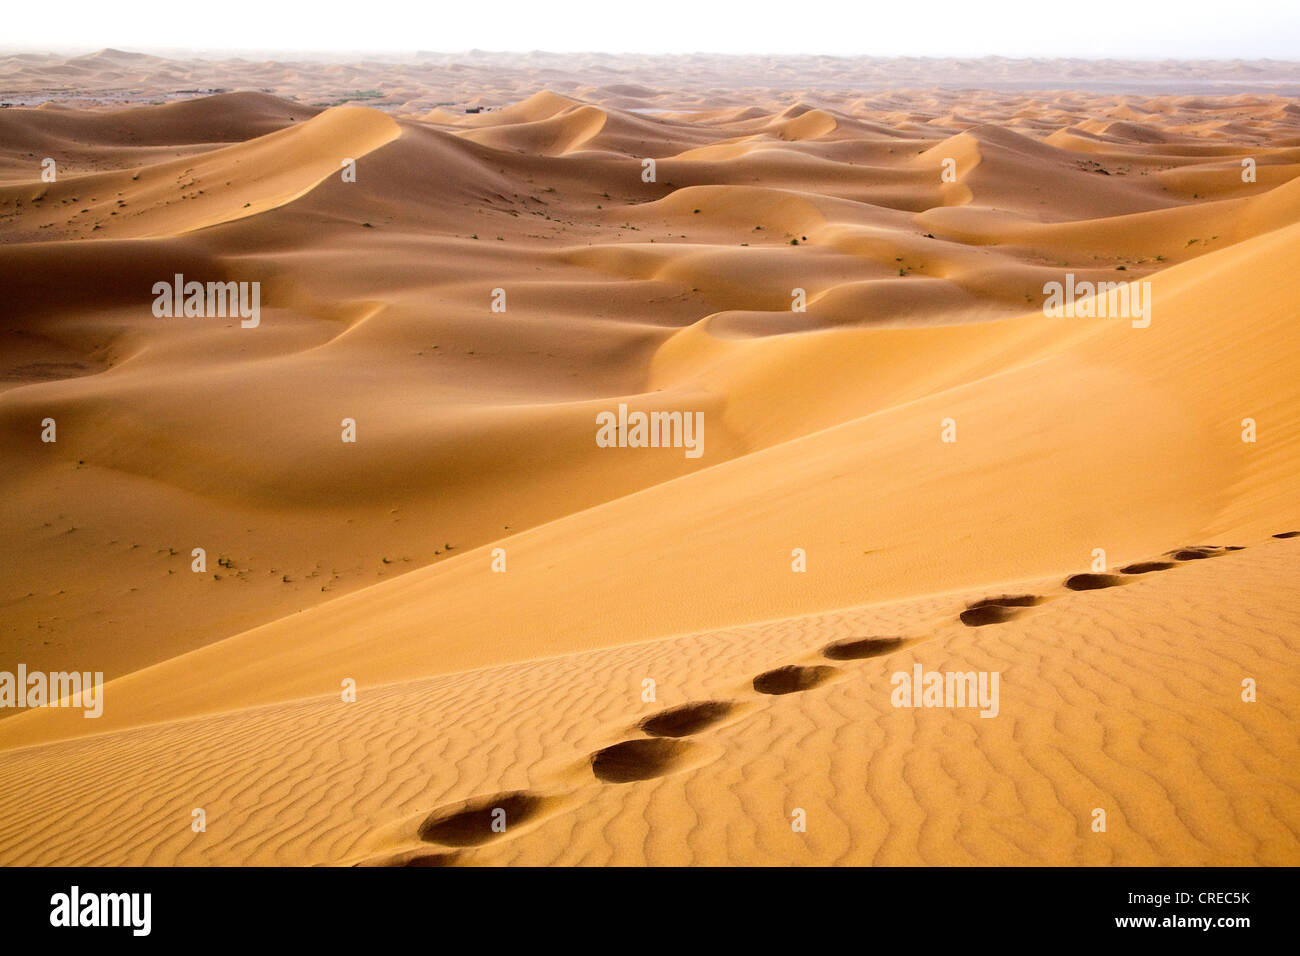 Dunes, Erg Chegaga region, Sahara desert near Mhamid, Morocco, Africa Stock Photo